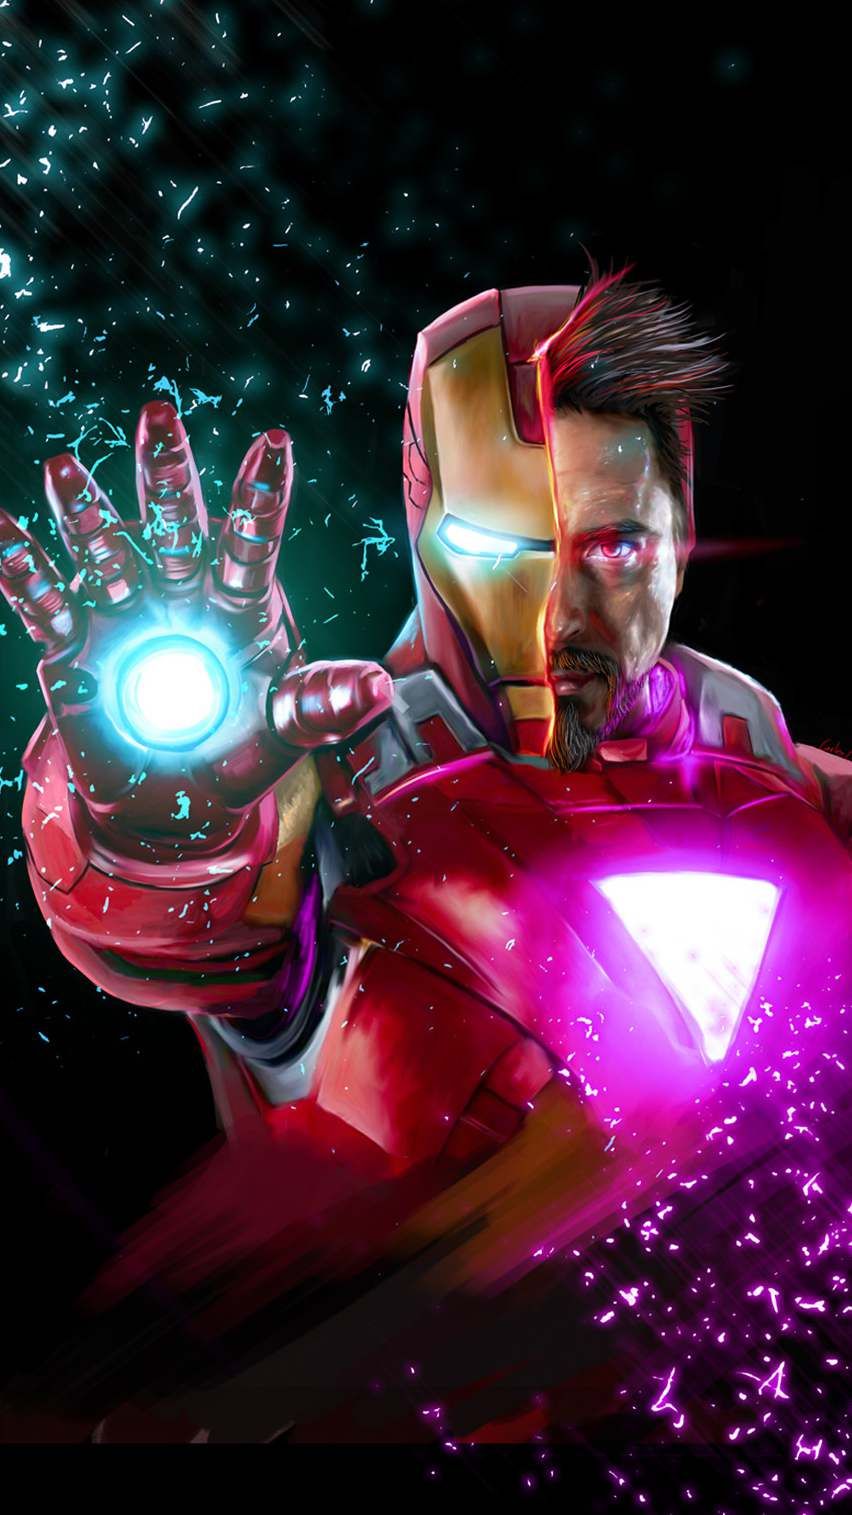  22 Avengers Endgame  Iron  Man  Wallpapers  on WallpaperSafari